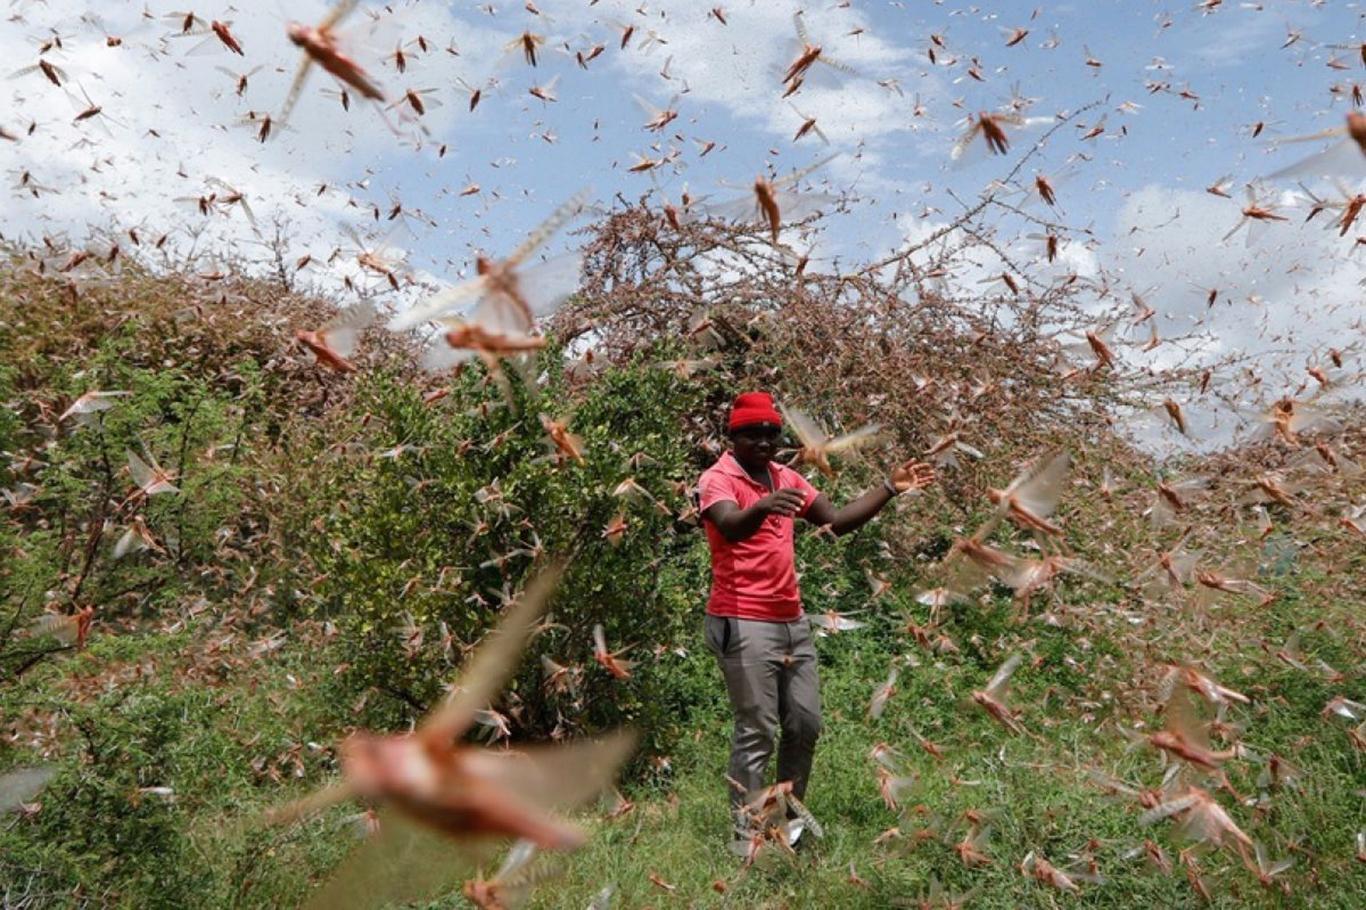 UN warns of food security after desert locust catastrophe in horn of Africa